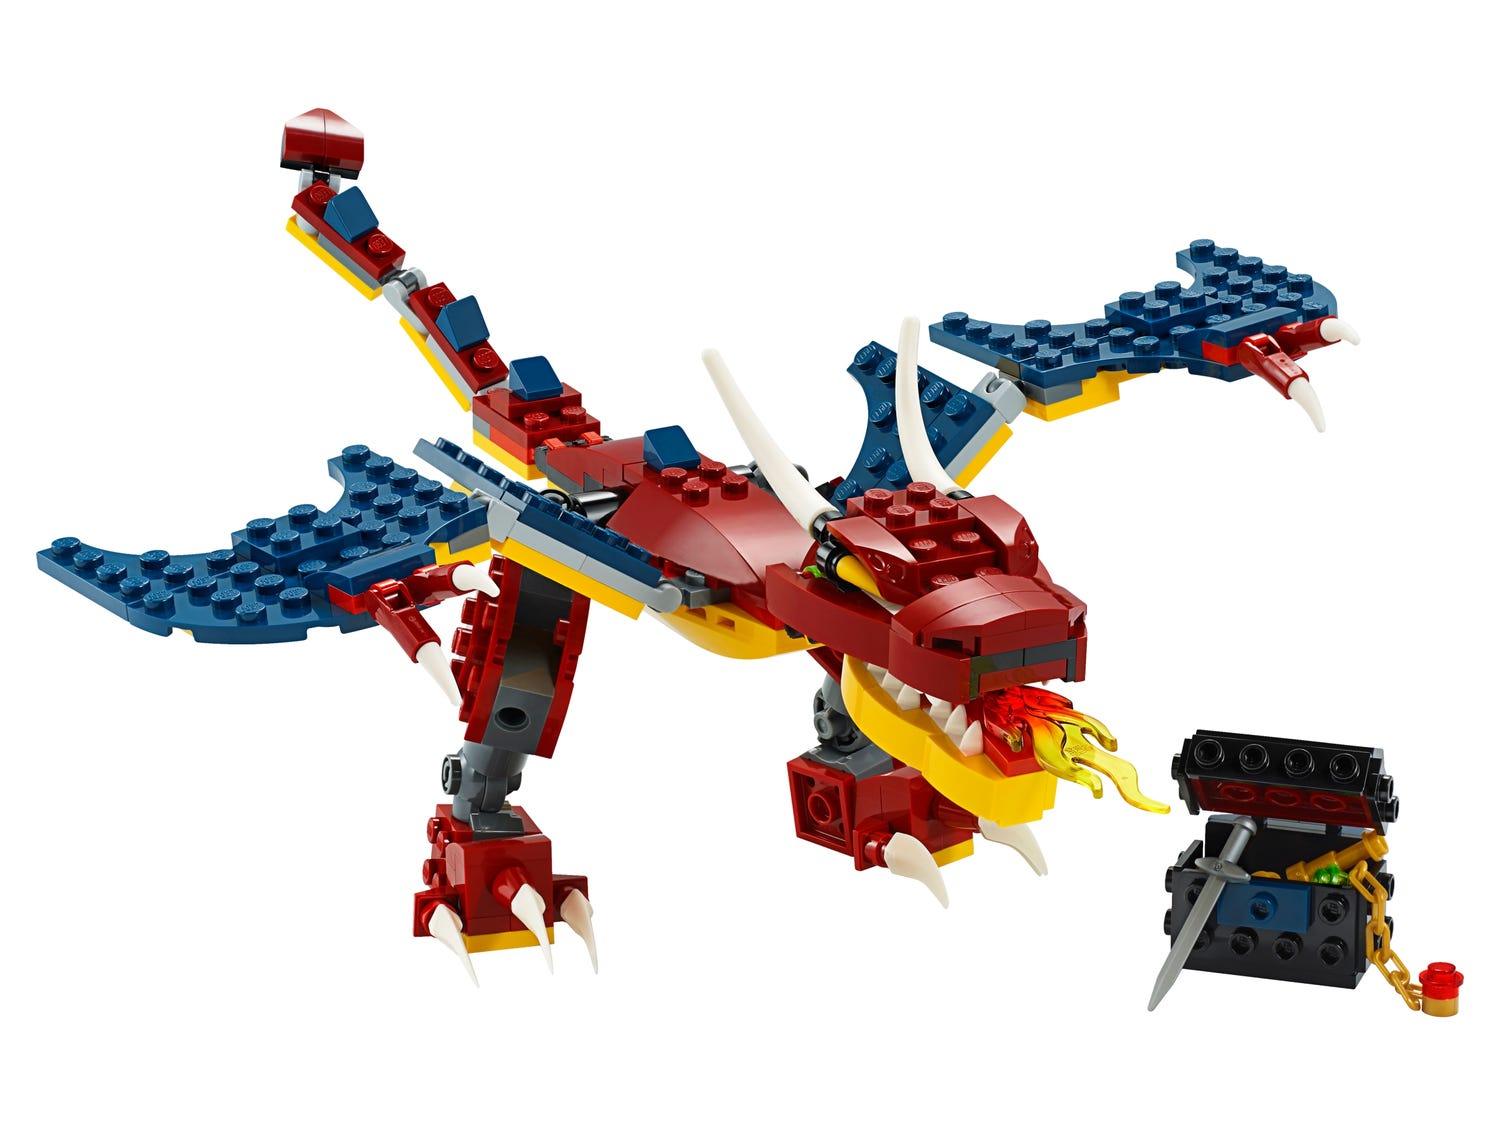 LEGO Vuur draak 31102 Creator 3-in-1 LEGO CREATOR @ 2TTOYS LEGO €. 15.49